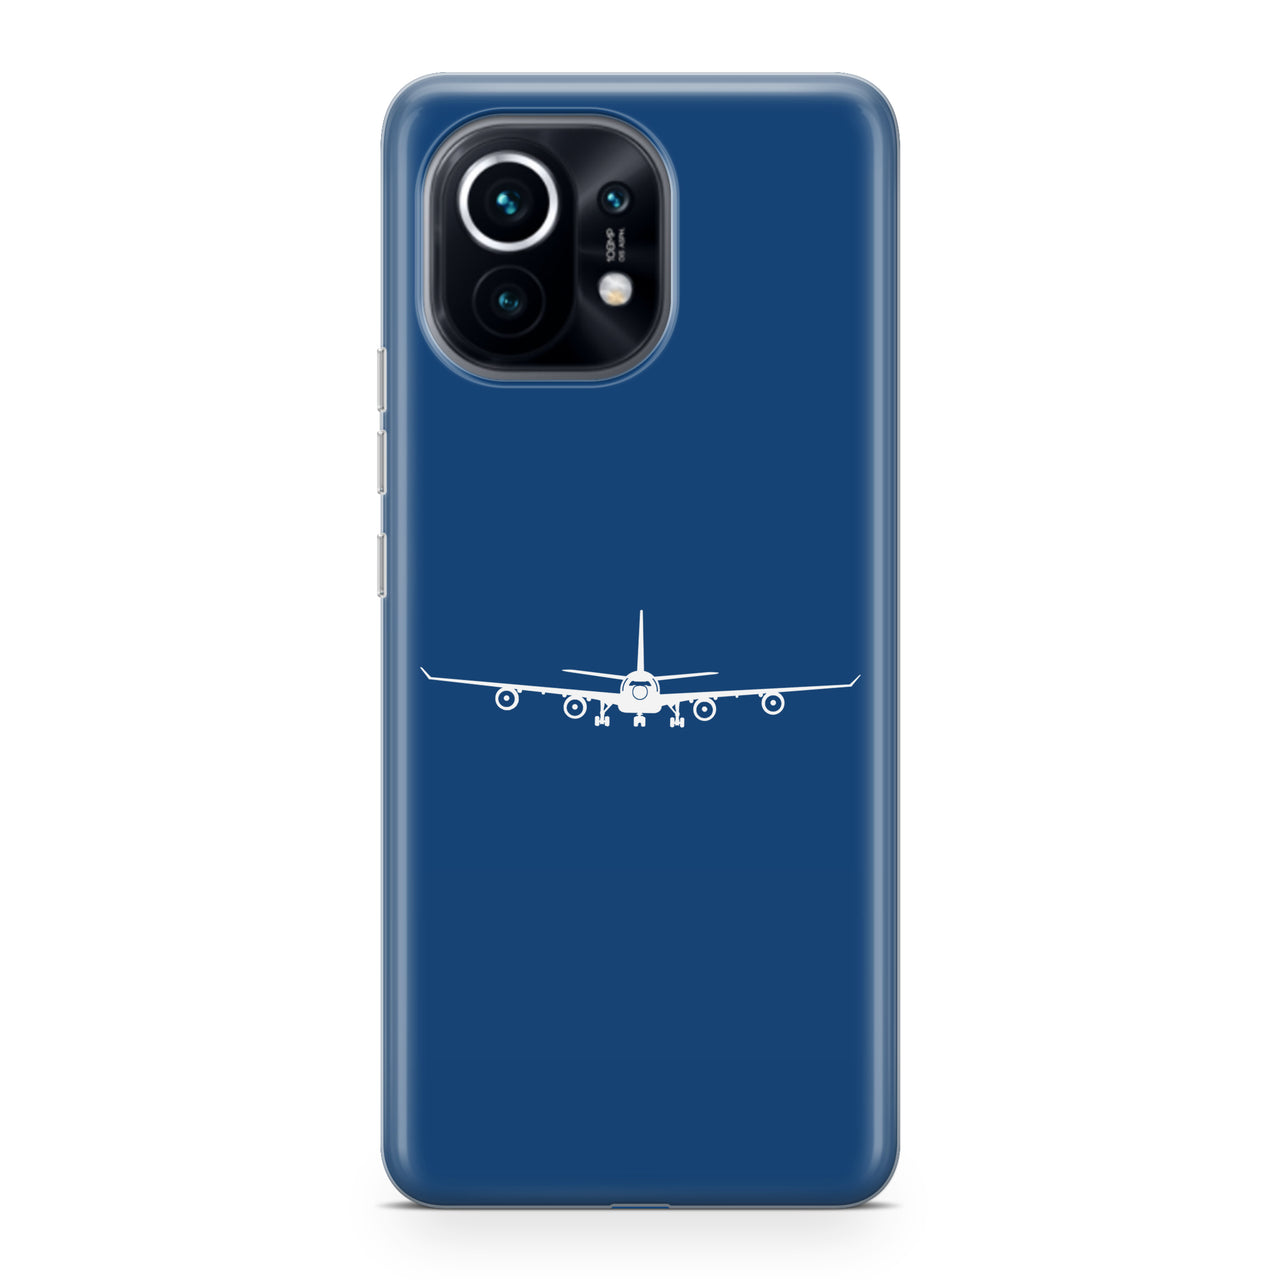 Airbus A340 Silhouette Designed Xiaomi Cases